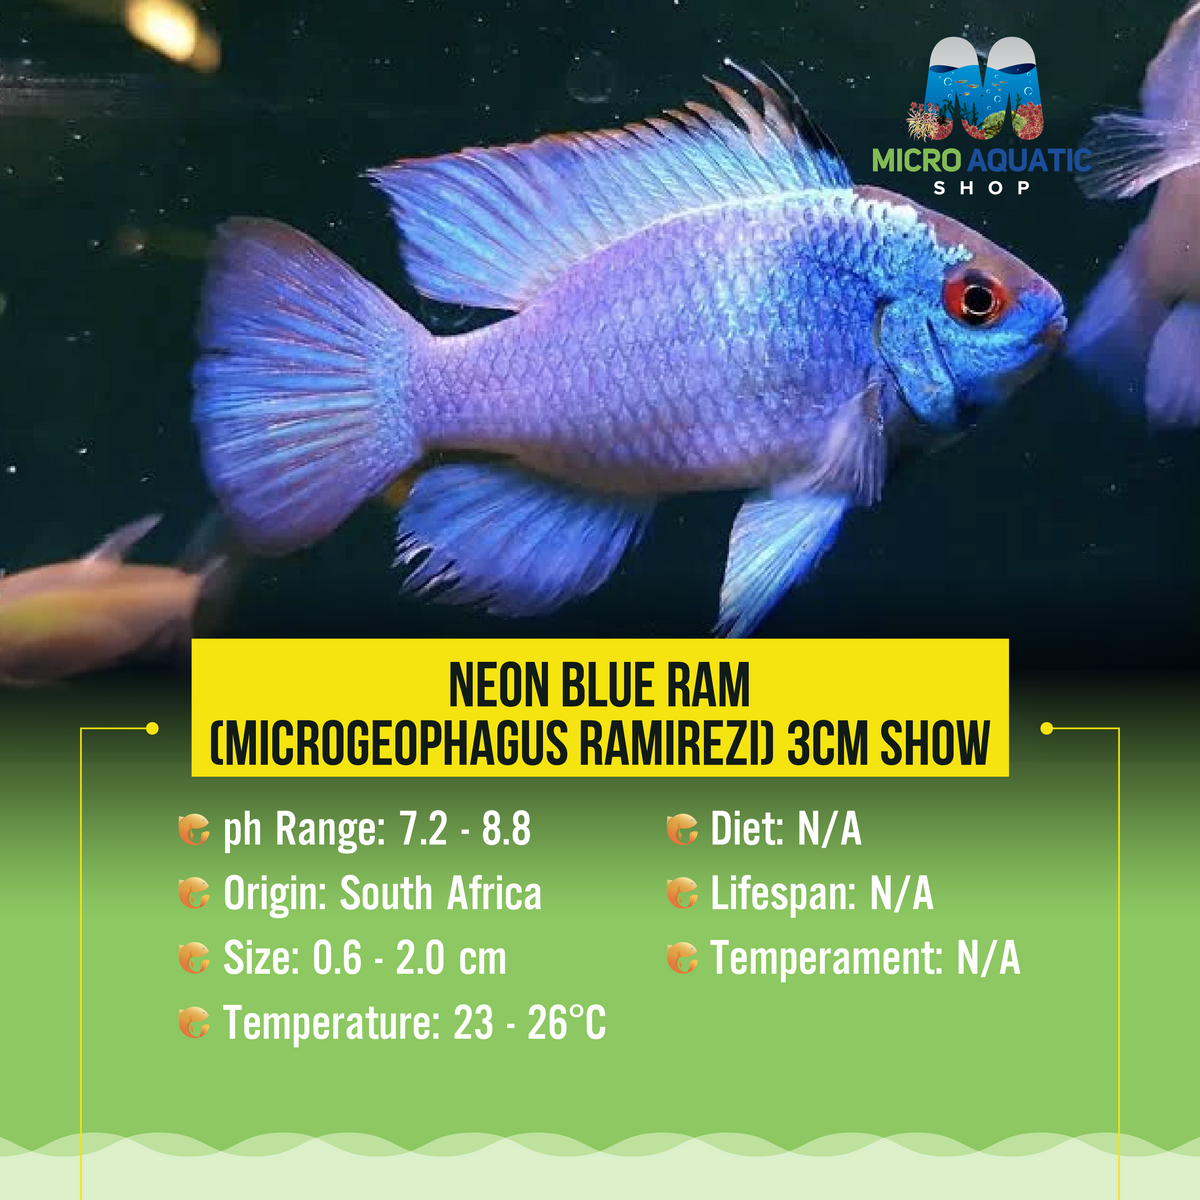 Neon Blue Ram (Microgeophagus ramirezi) 3cm Show